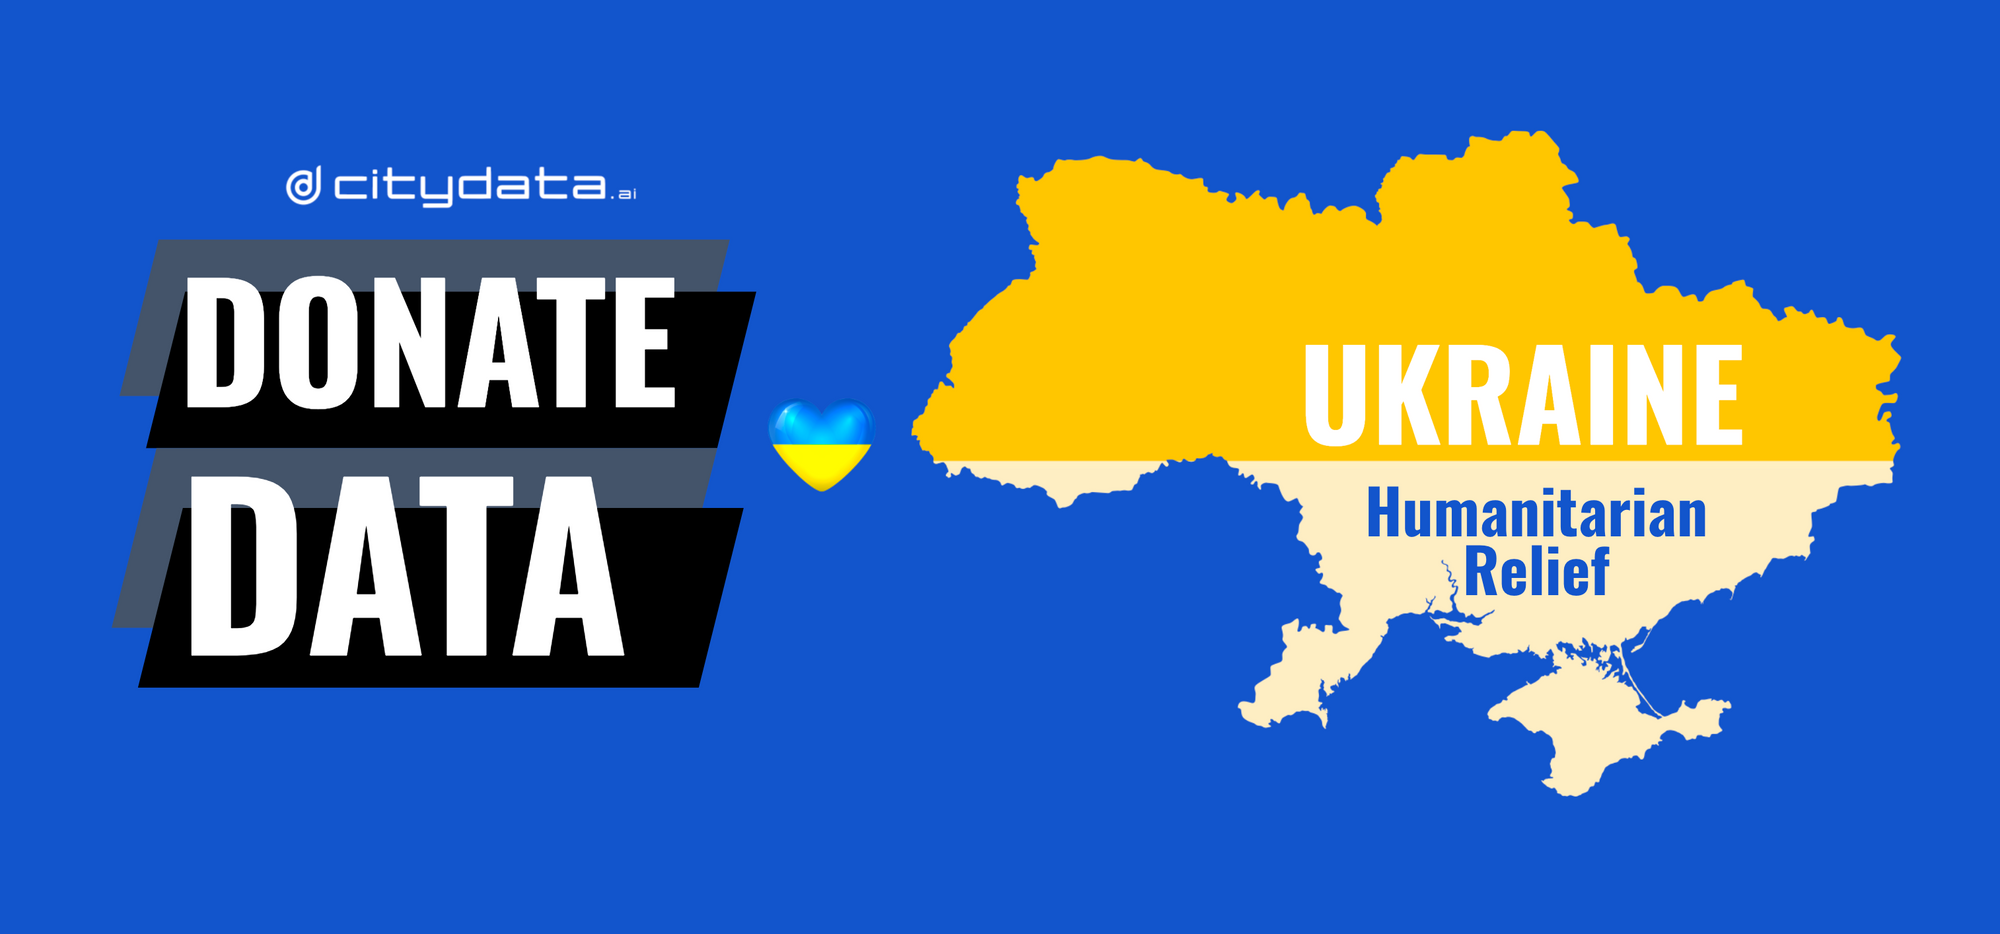 Donate Your Data for Ukraine Crisis Relief